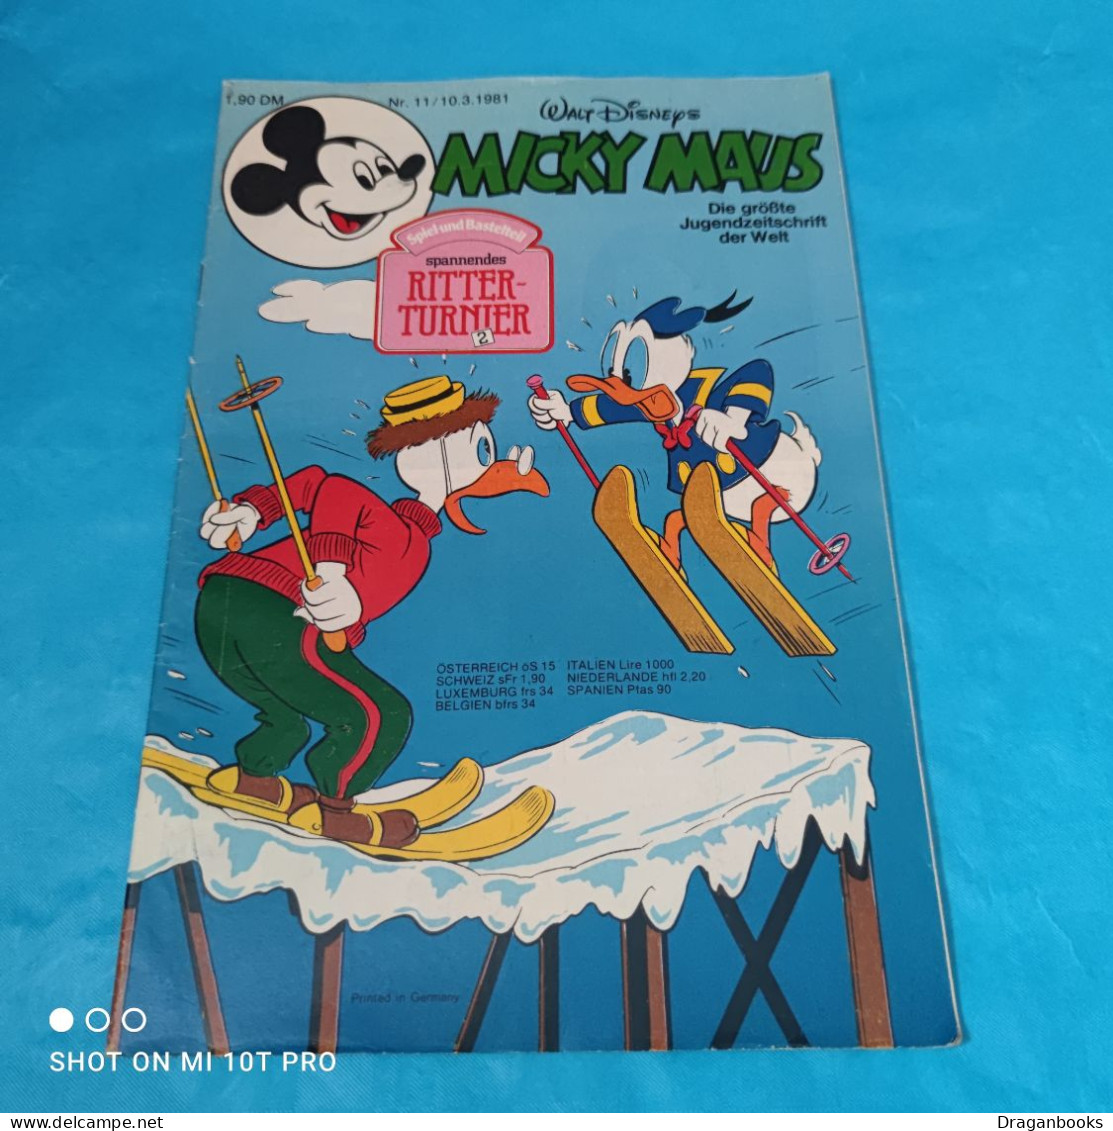 Micky Maus Nr. 11 - 10.3.1981 - Walt Disney